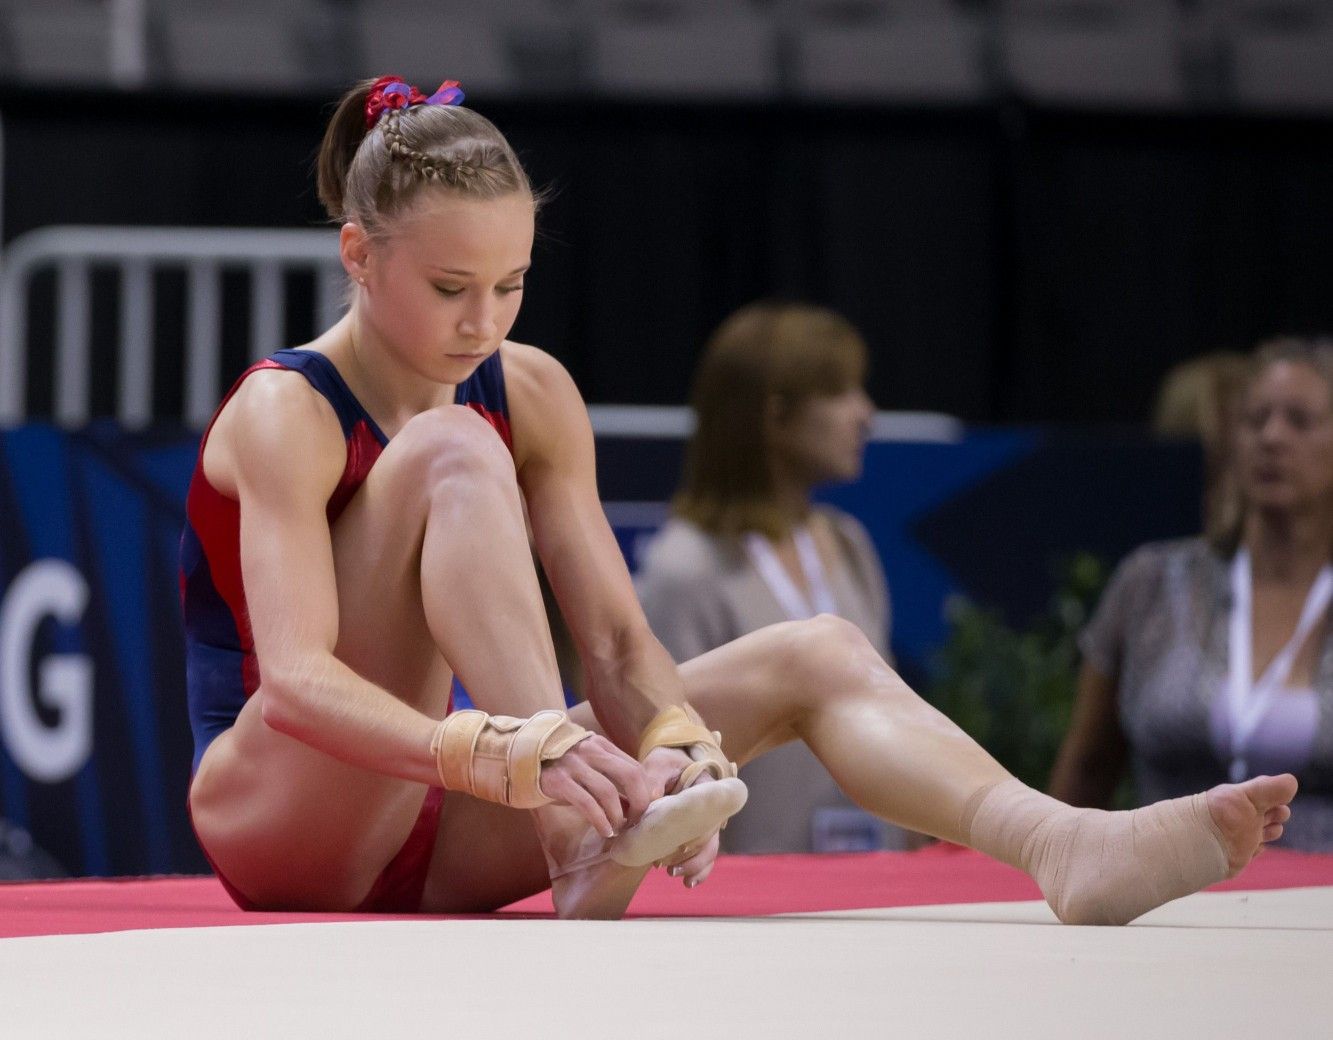 The Arrival of Anastasia Motak - An Old School Gymnastics Blog